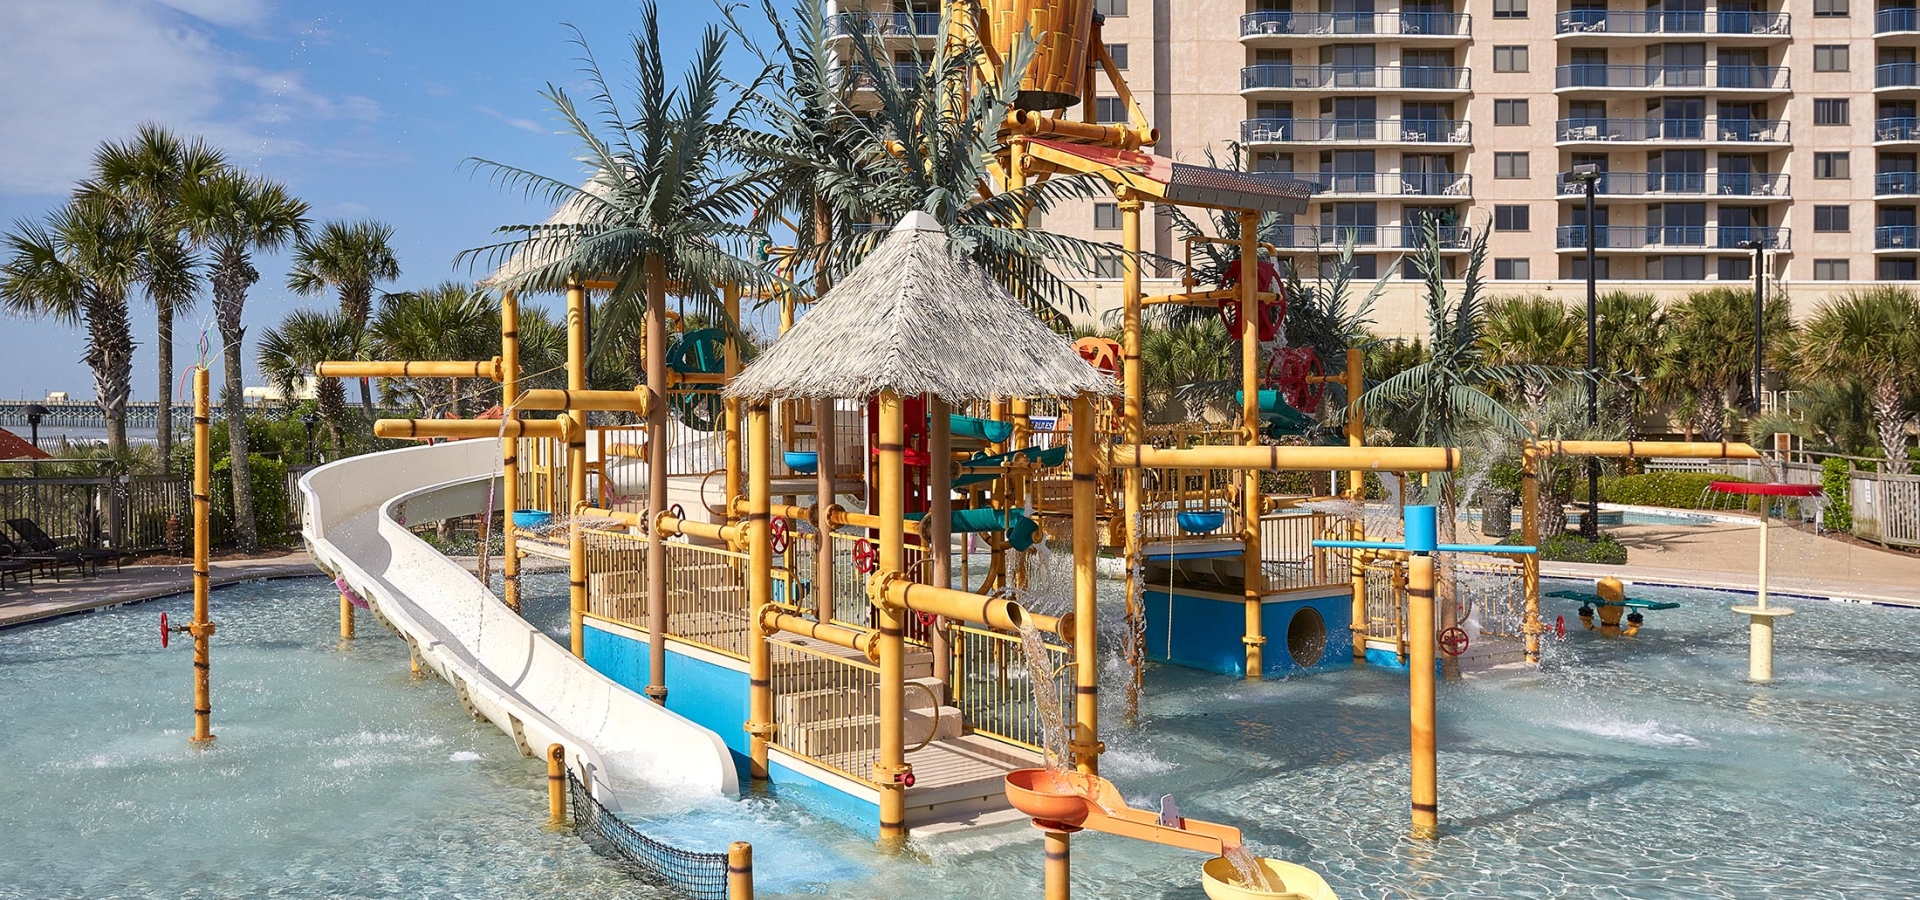 Slide at waterpark